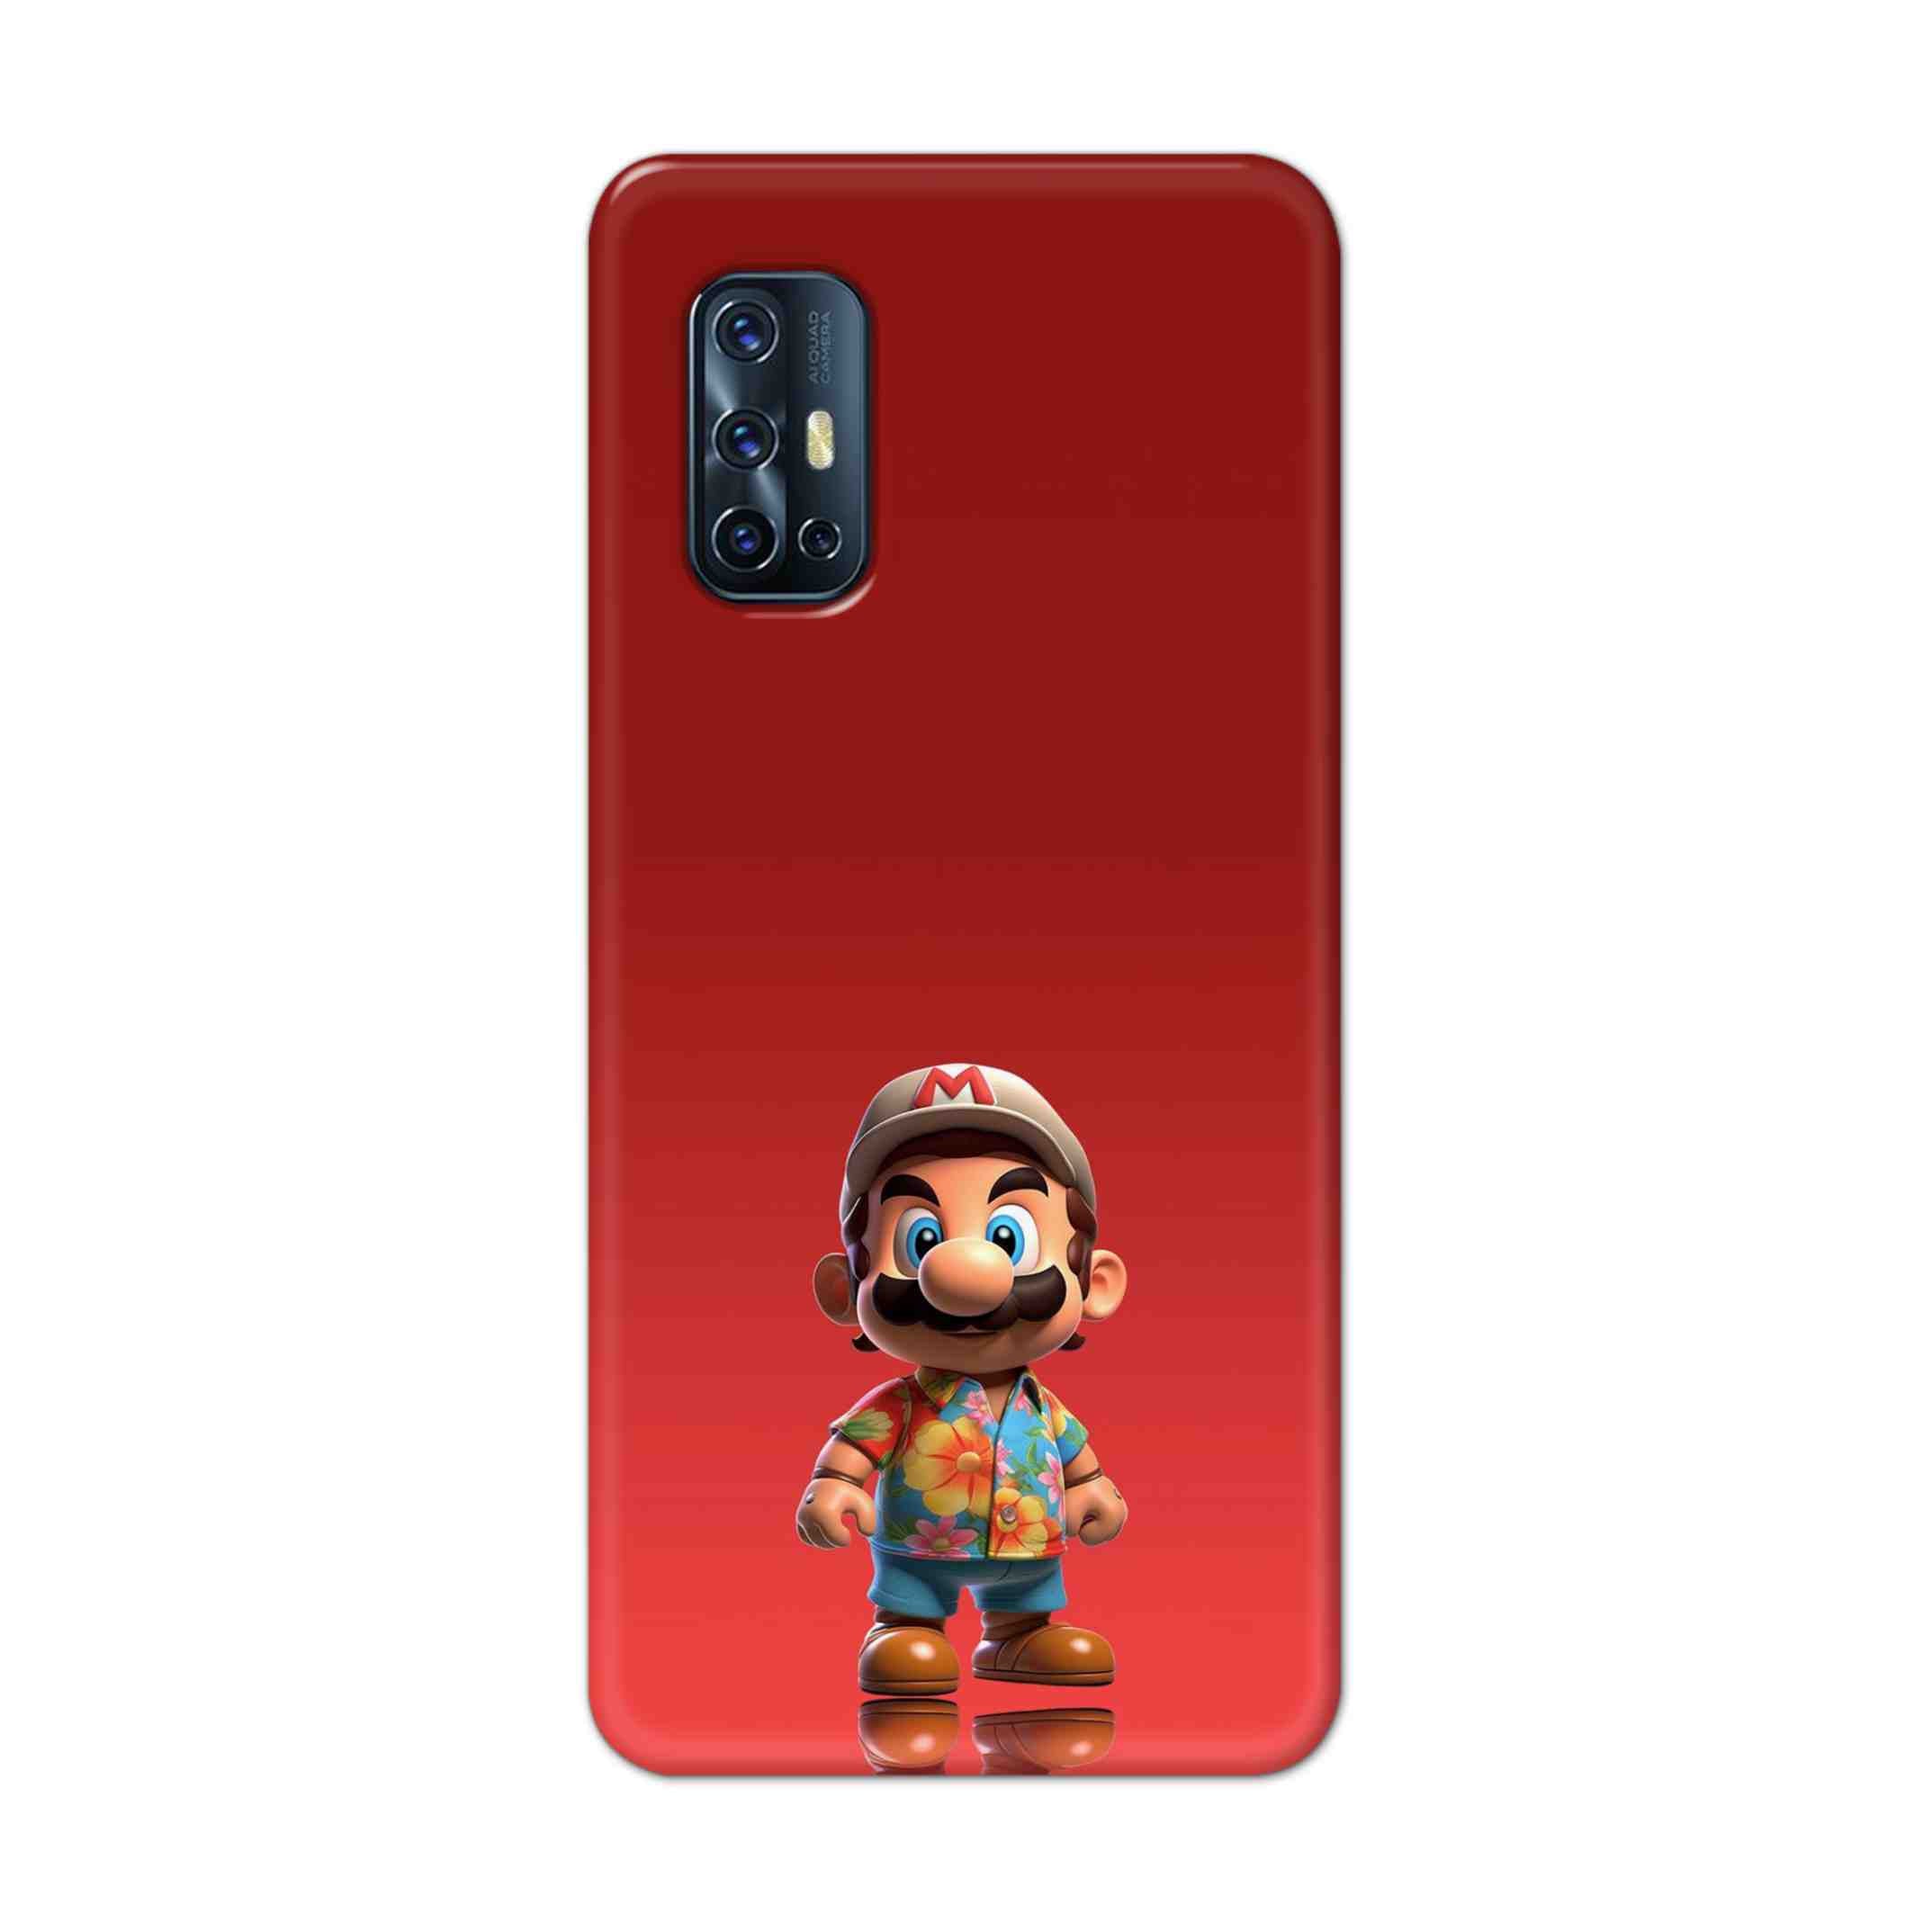 Buy Mario Hard Back Mobile Phone Case Cover For Vivo V17 Online